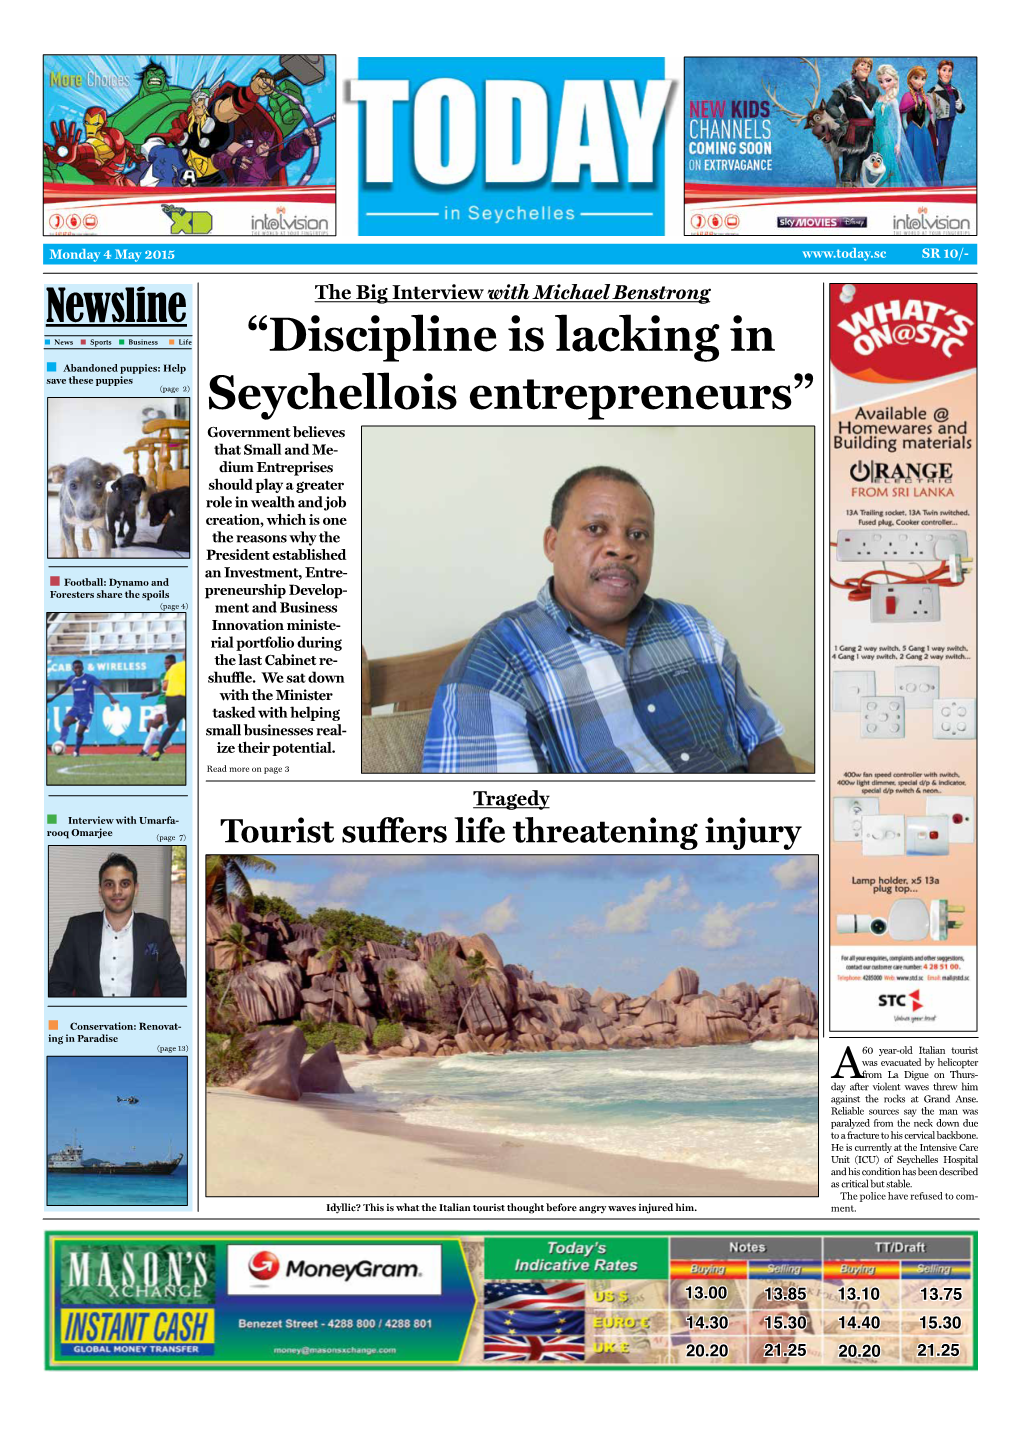 “Discipline Is Lacking in Seychellois Entrepreneurs”